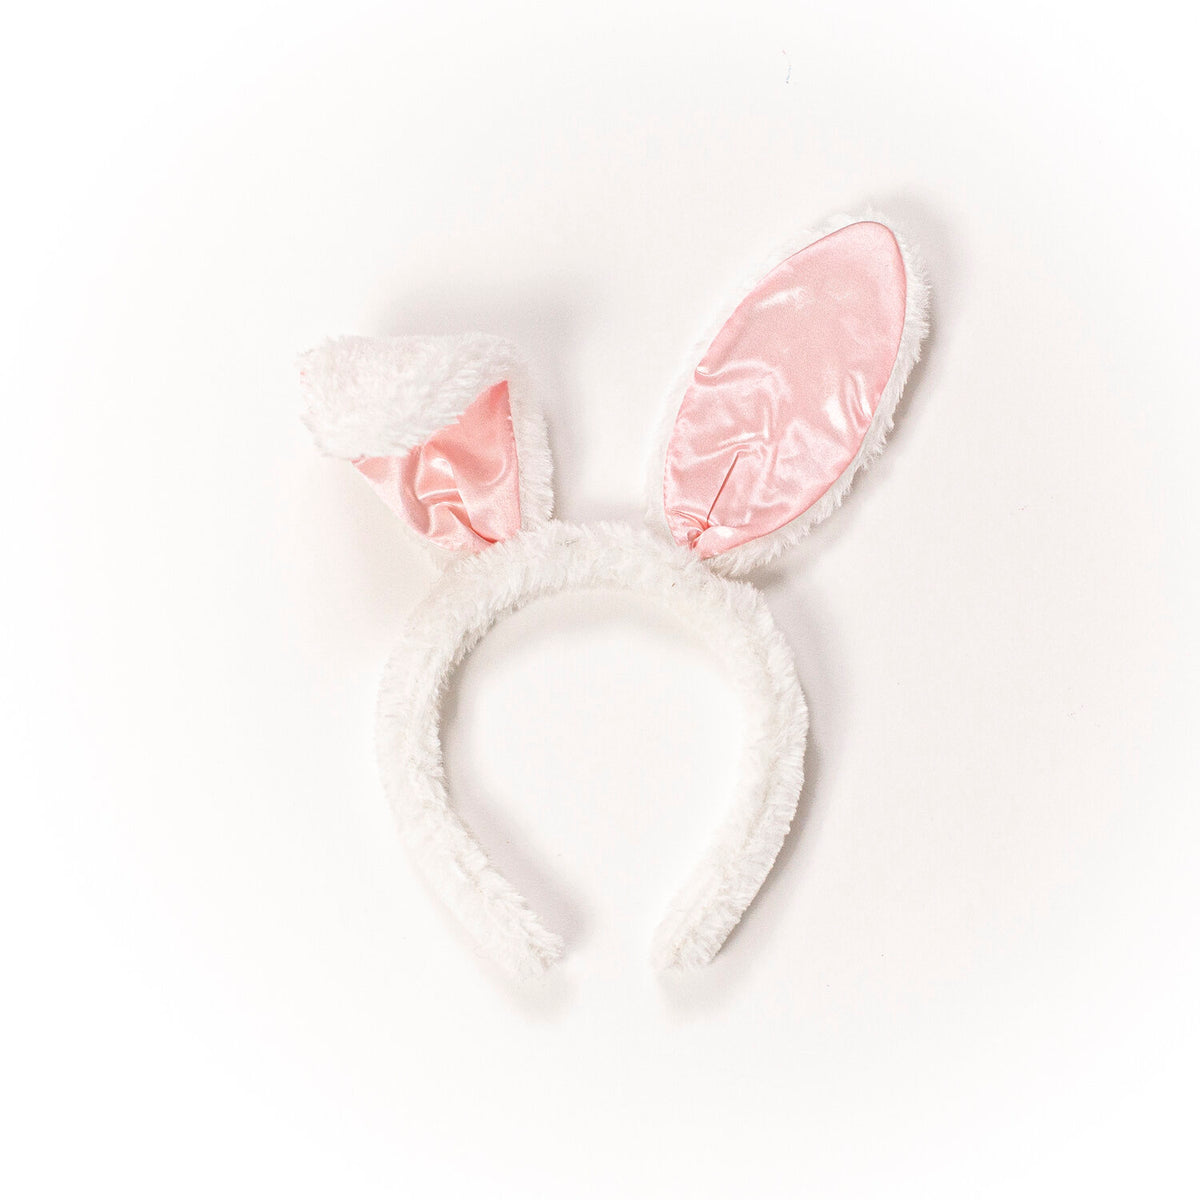 Spring Bunny Knotted Headband Kit - Cream Bunnies on Pink DIY Knotted Headband  Kit – Pip Supply